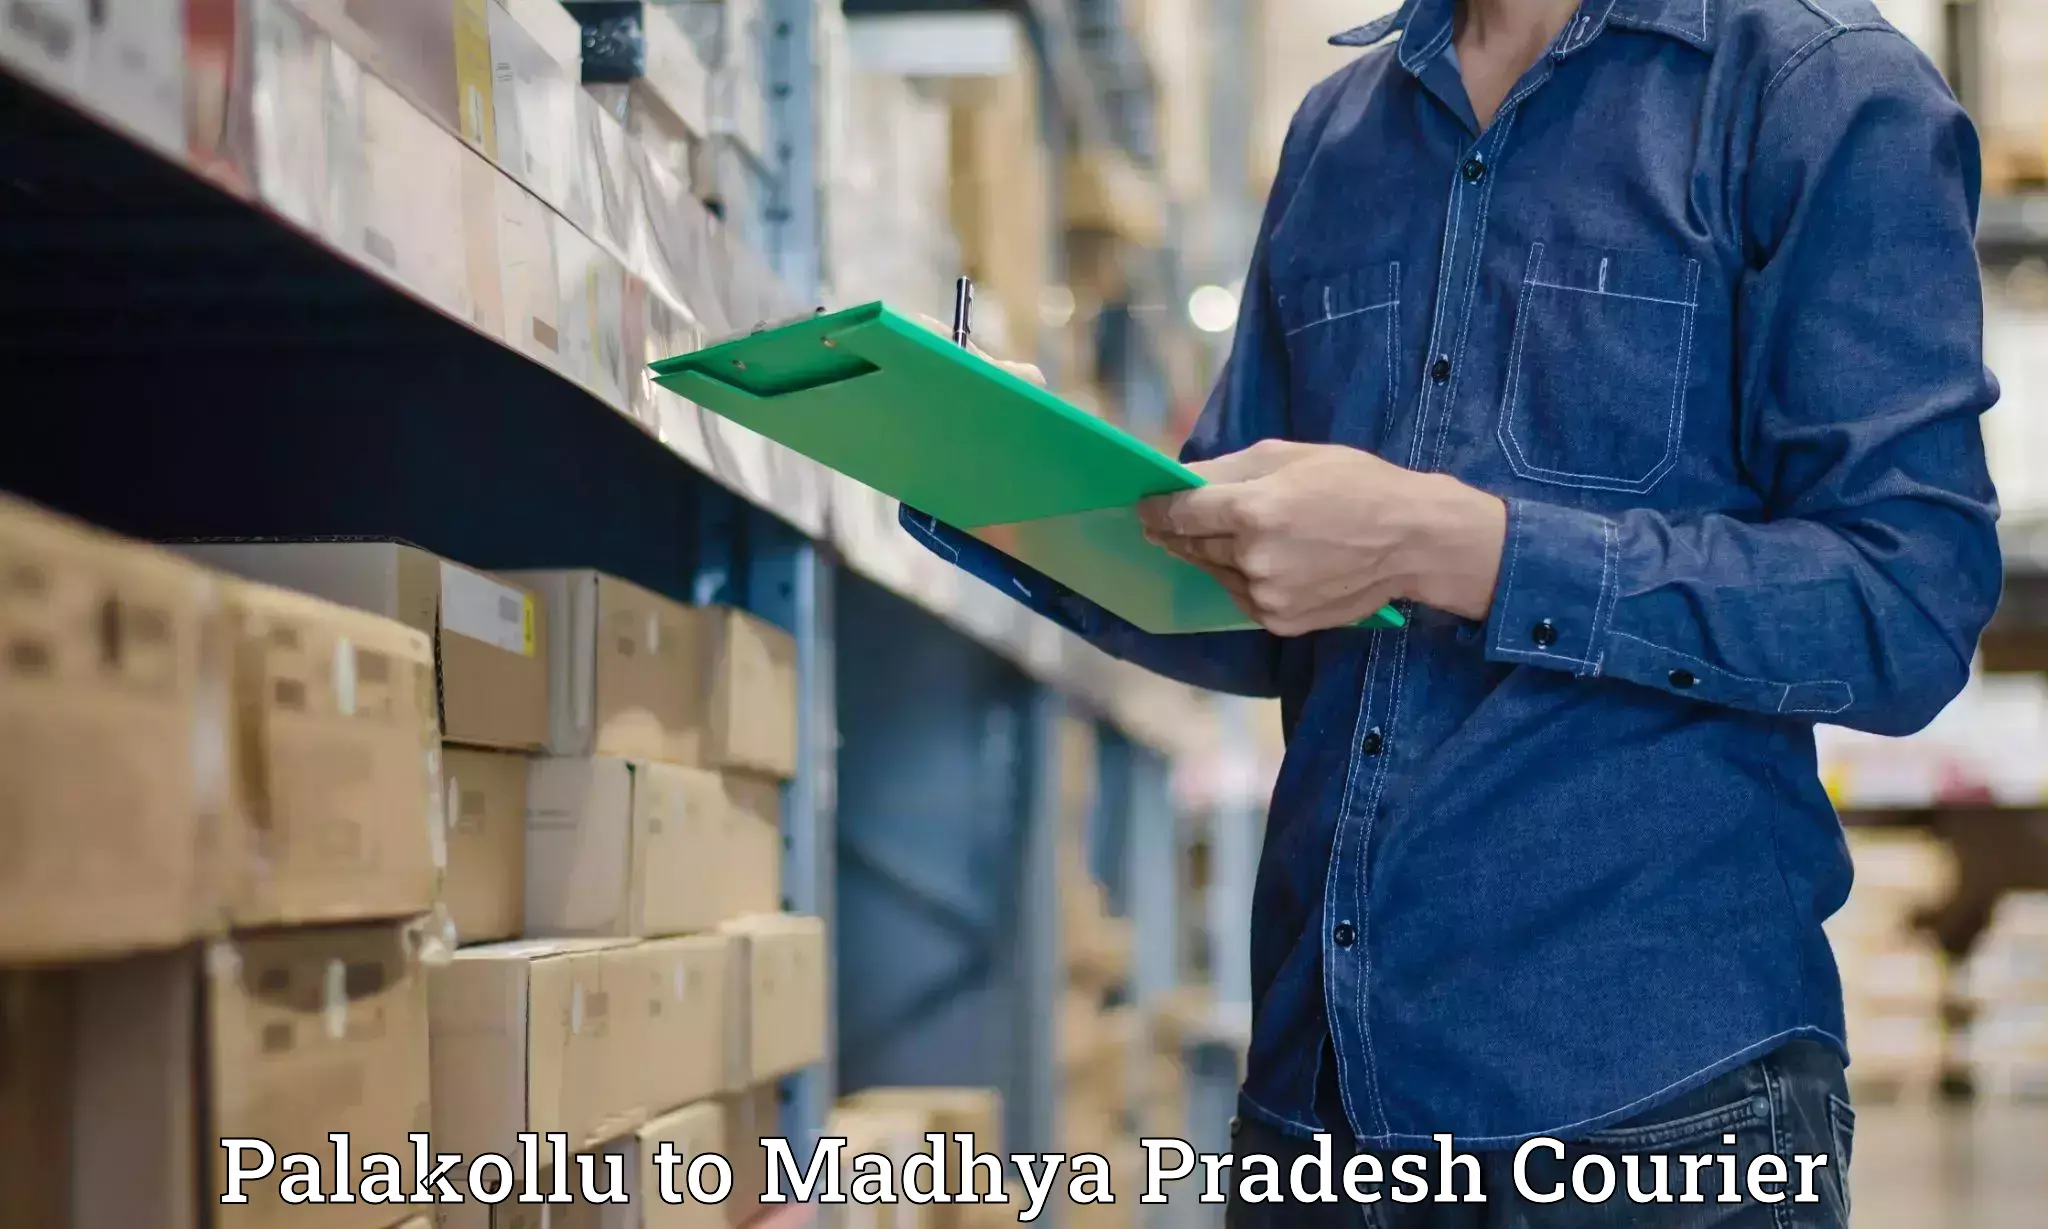 Logistics service provider Palakollu to Madhya Pradesh